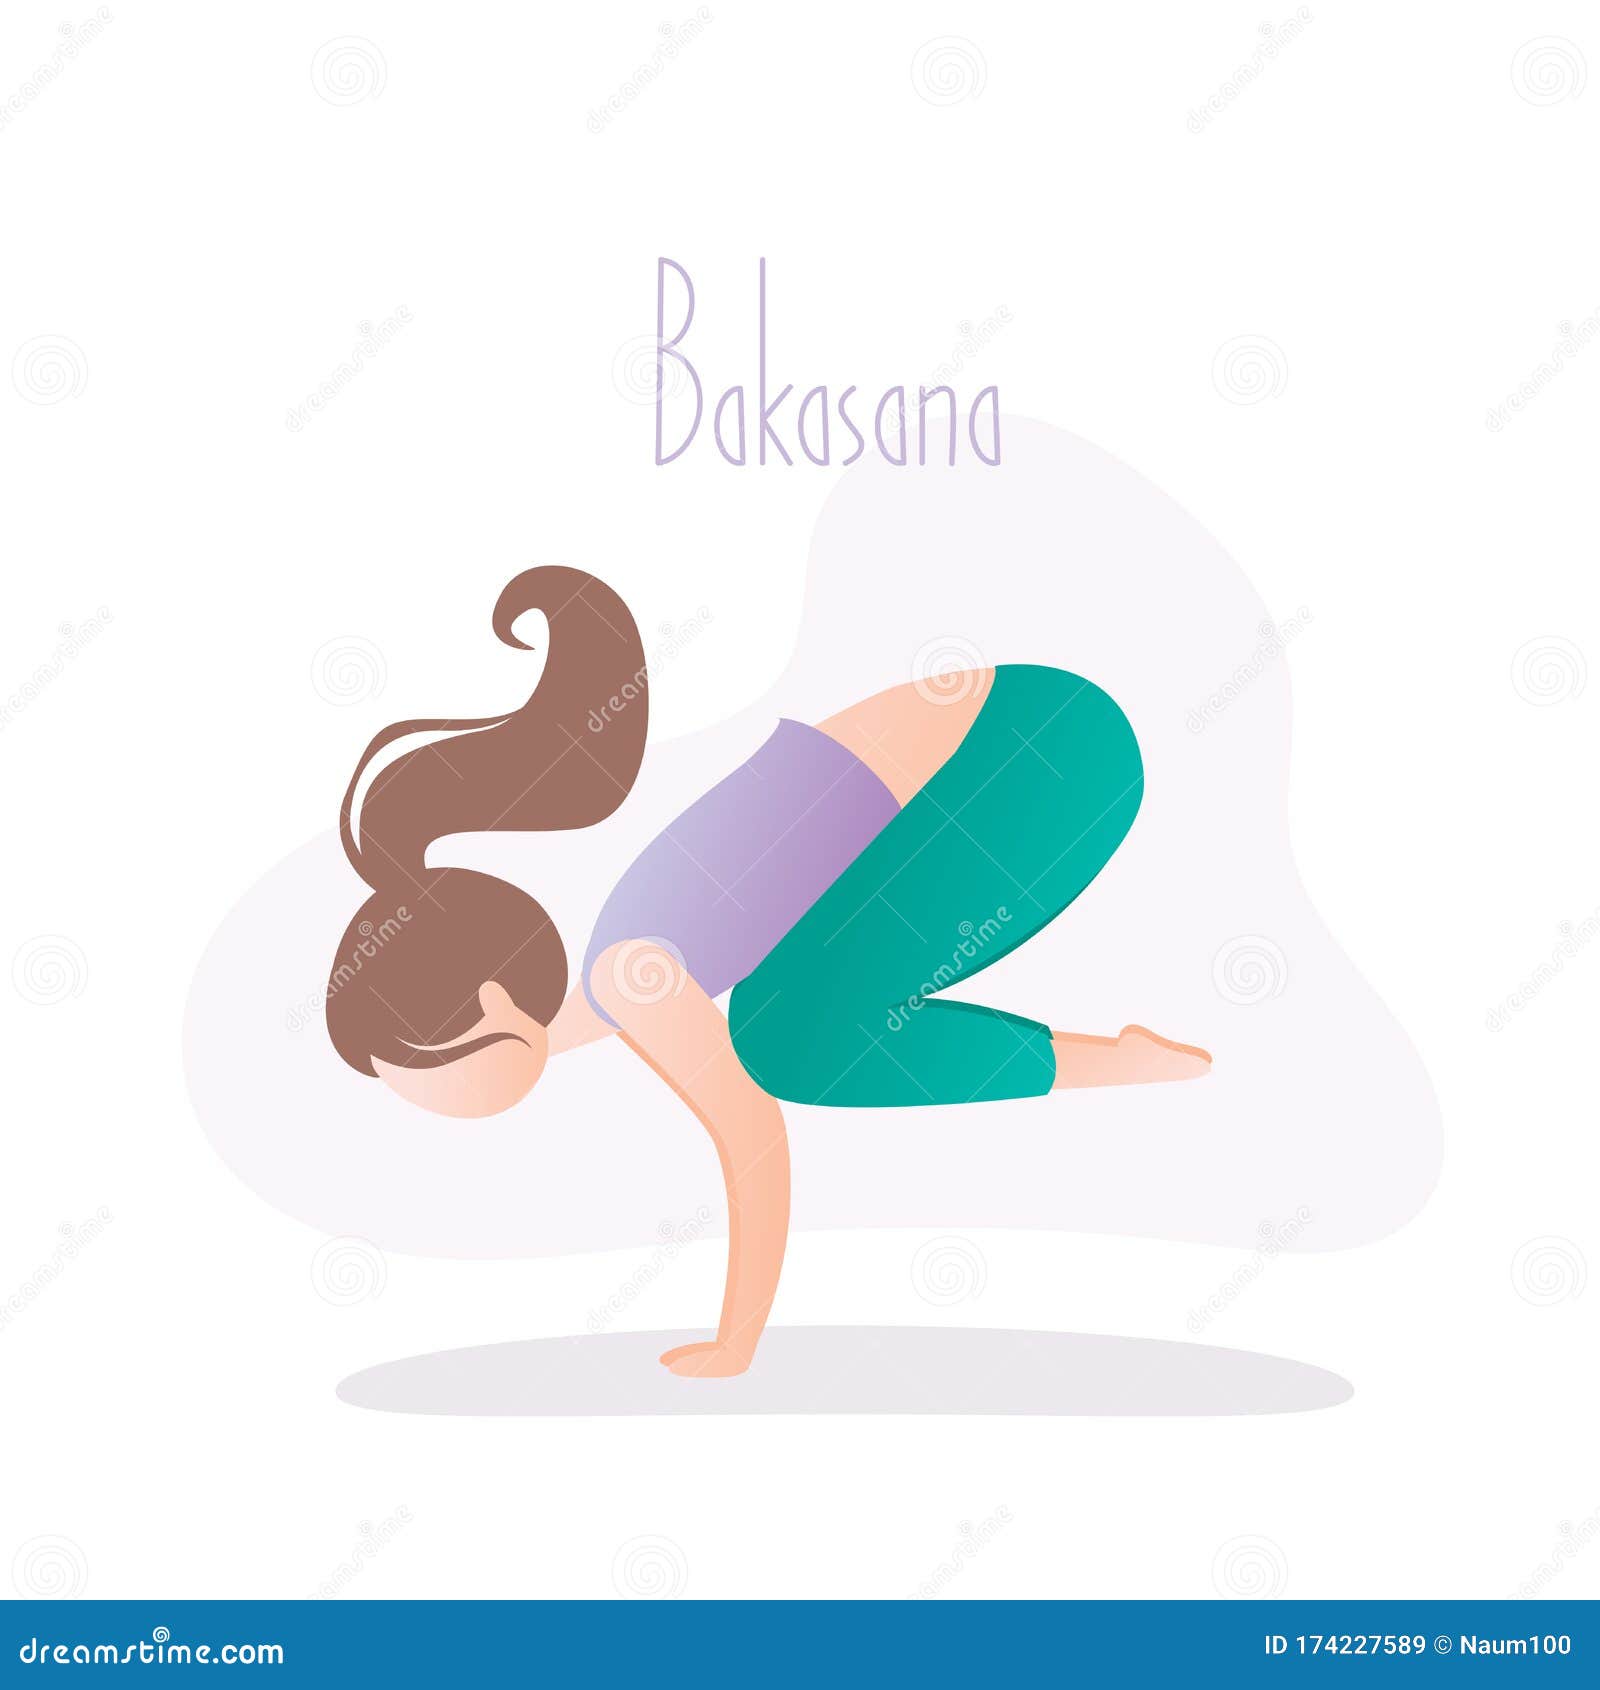 Woman Doing Yoga Pose Crow Pose Or Bakasana Asana In Hatha Yoga Stock Vector Illustration Of Balance Bakasana 174227589